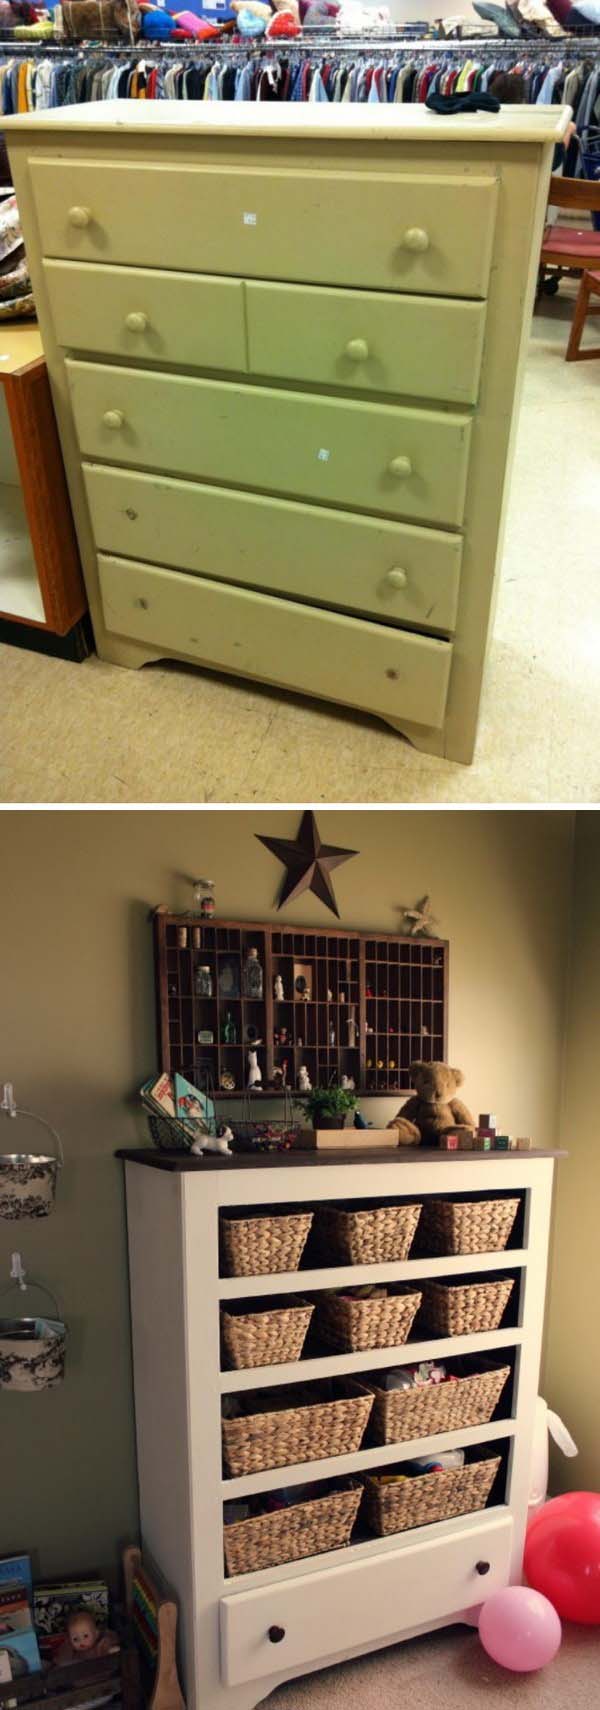 DIY Old Dresser Into Storage #dıƴ #furnıture #makeover #repurpose #decorhomeideas